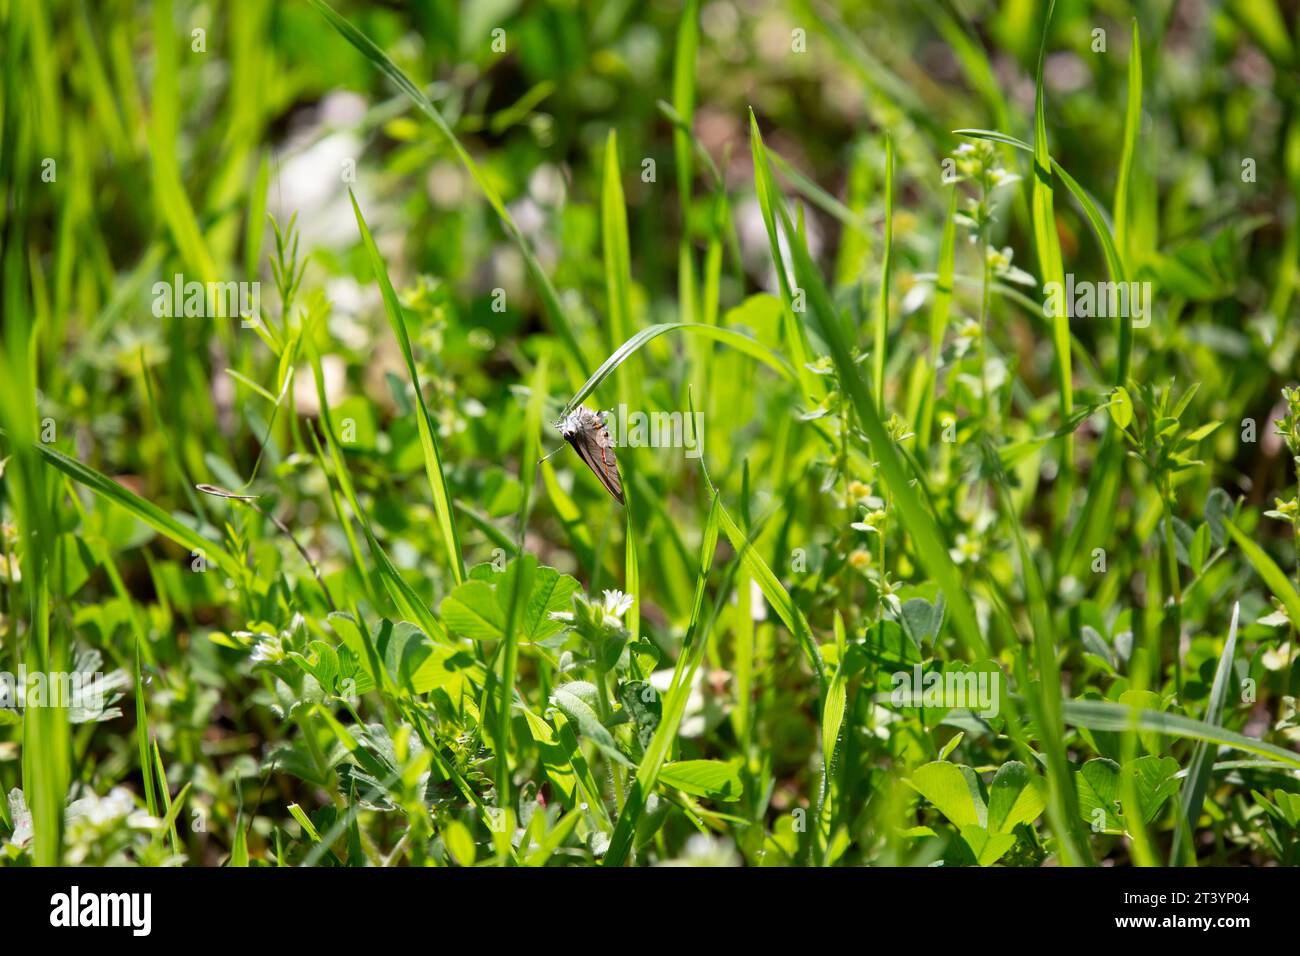 Striscia di capelli rossa (Calycopis cecrops) appesa a una lama di erba verde e vivace Foto Stock